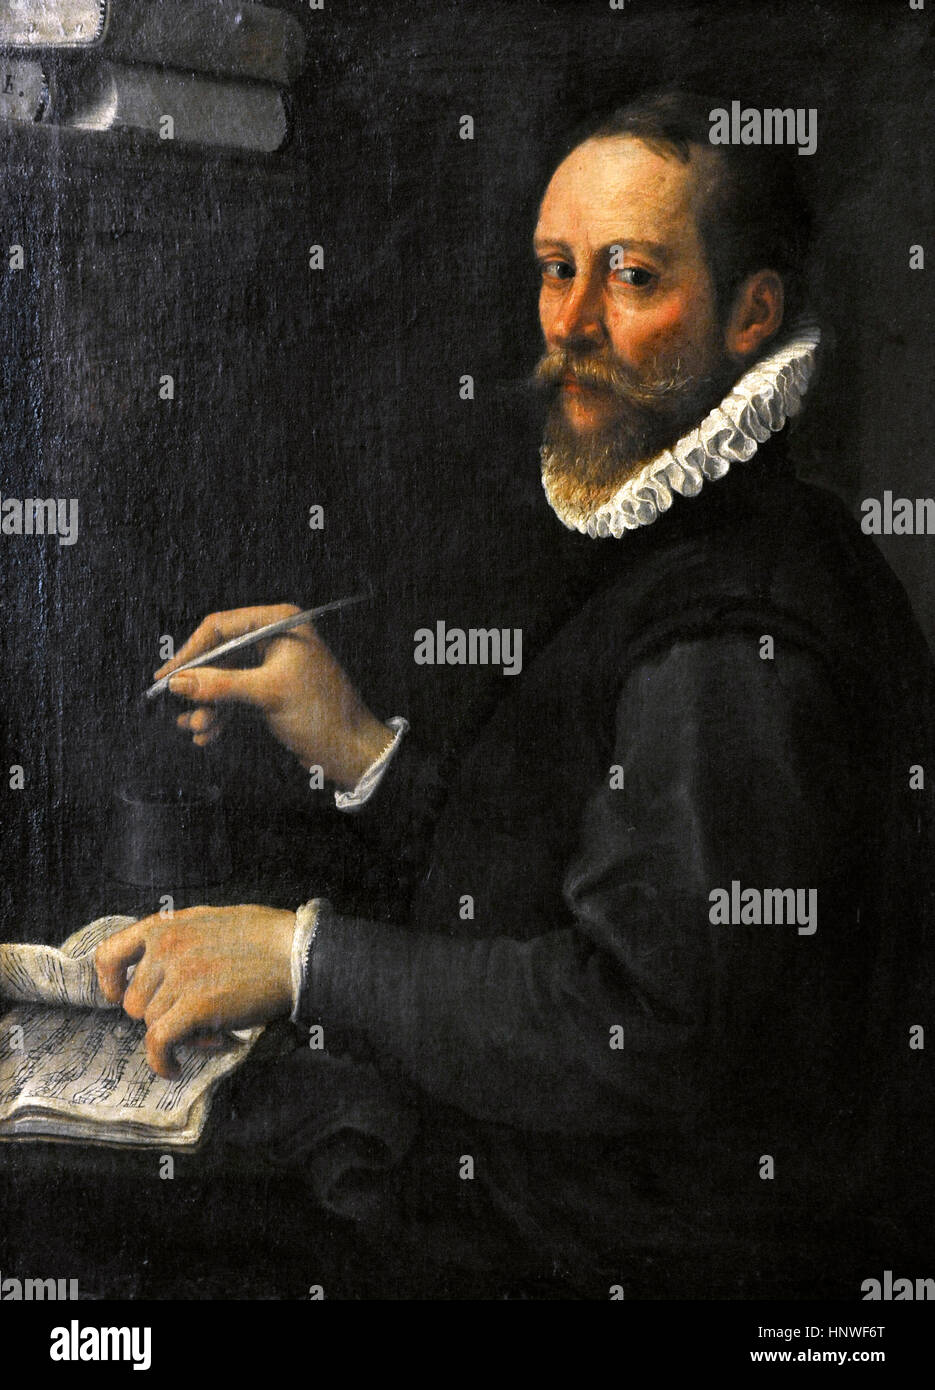 Annibale Carracci (1560-1609). Italienische Barockmaler. Portrait eines Musikers, ca.1587. Farnese-Sammlung. Nationales Museum von Capodimonte. Neapel. Italien. Stockfoto